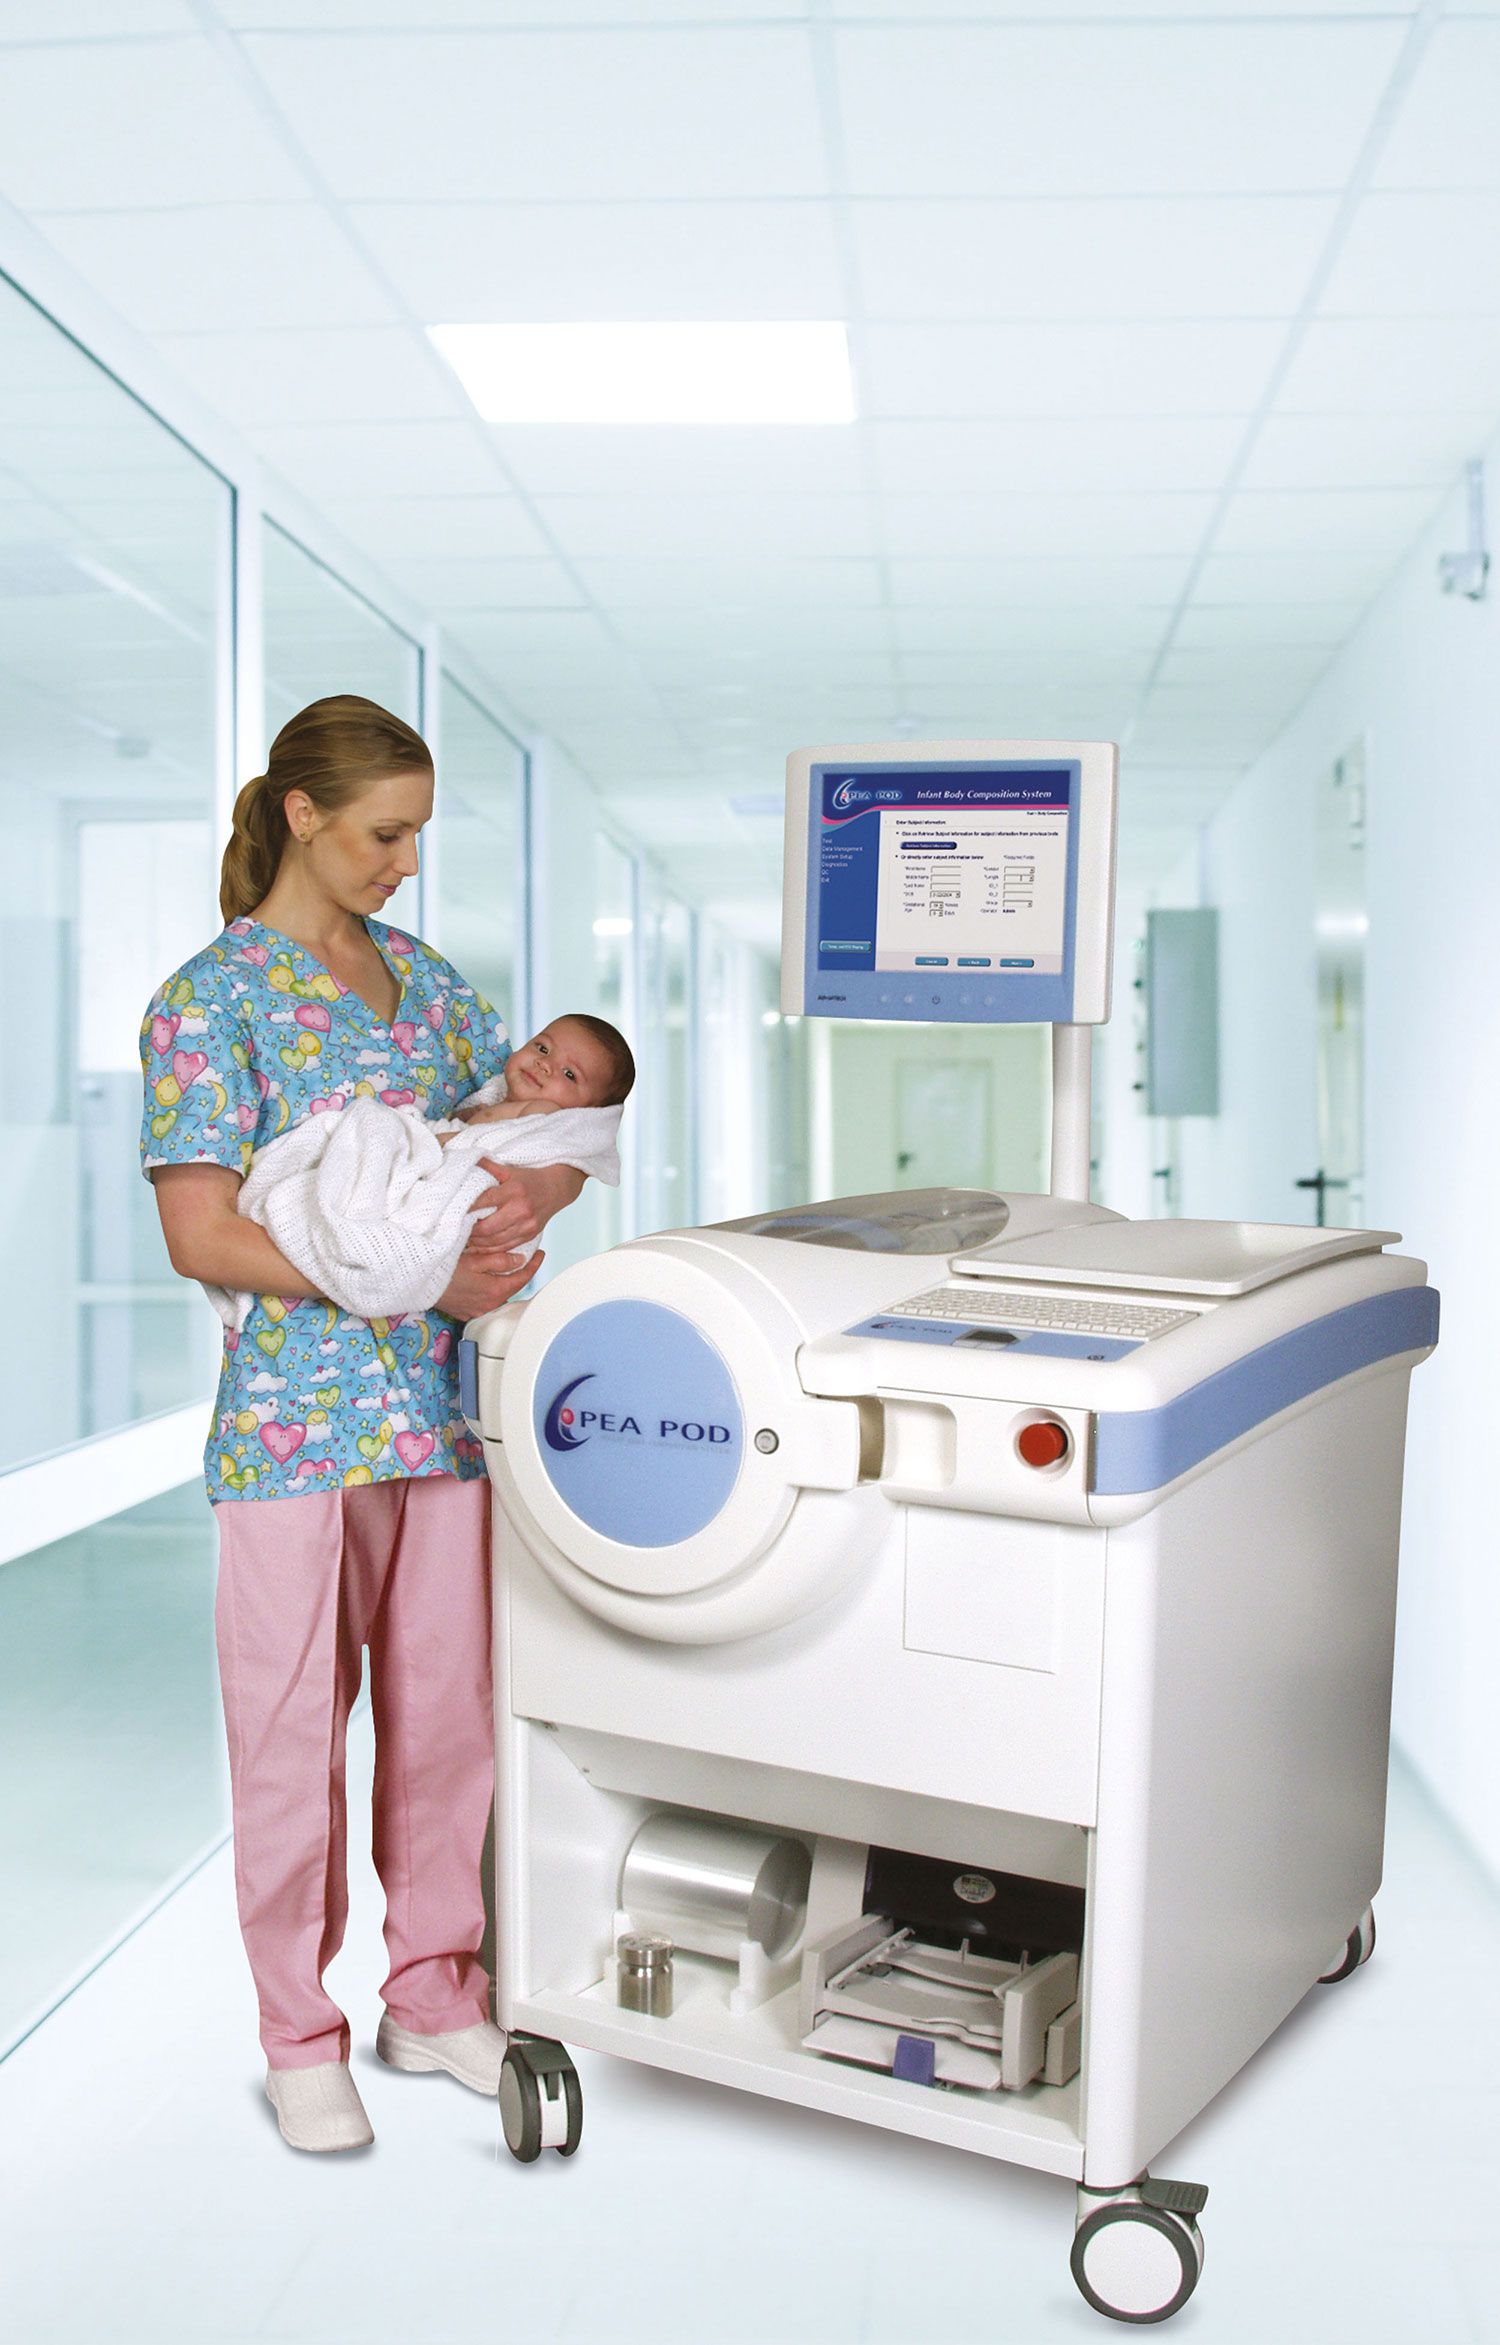 PEA POD - nurse with newborn near the plethysmographic chamber